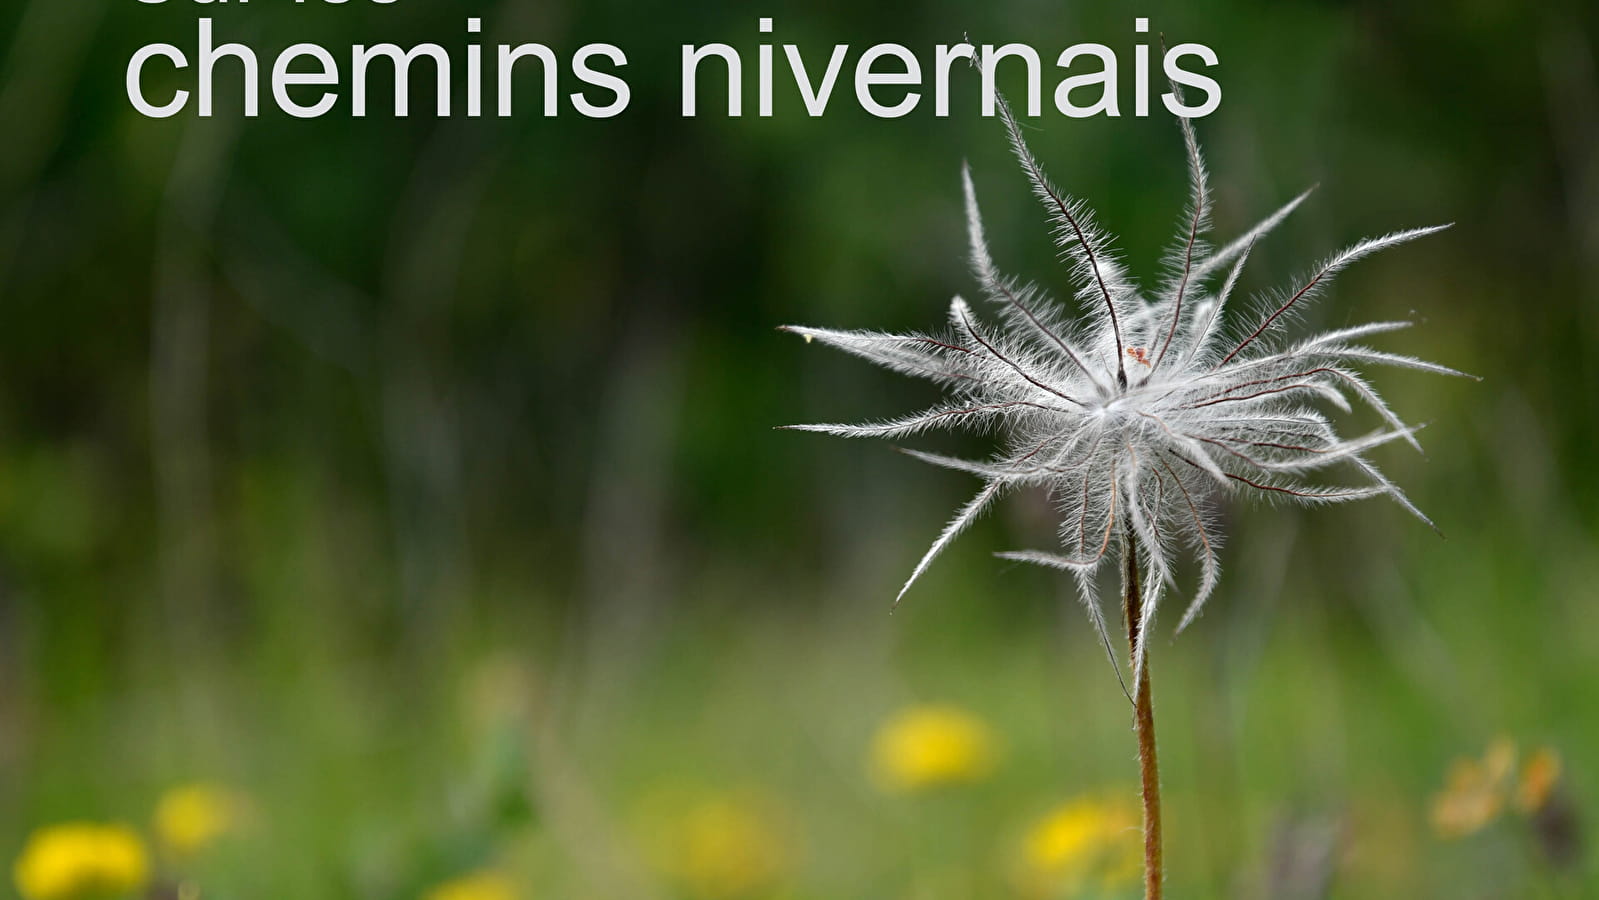 Fotoausstellung 'Sur les chemins nivernais' (Auf den Wegen von Nivernais)